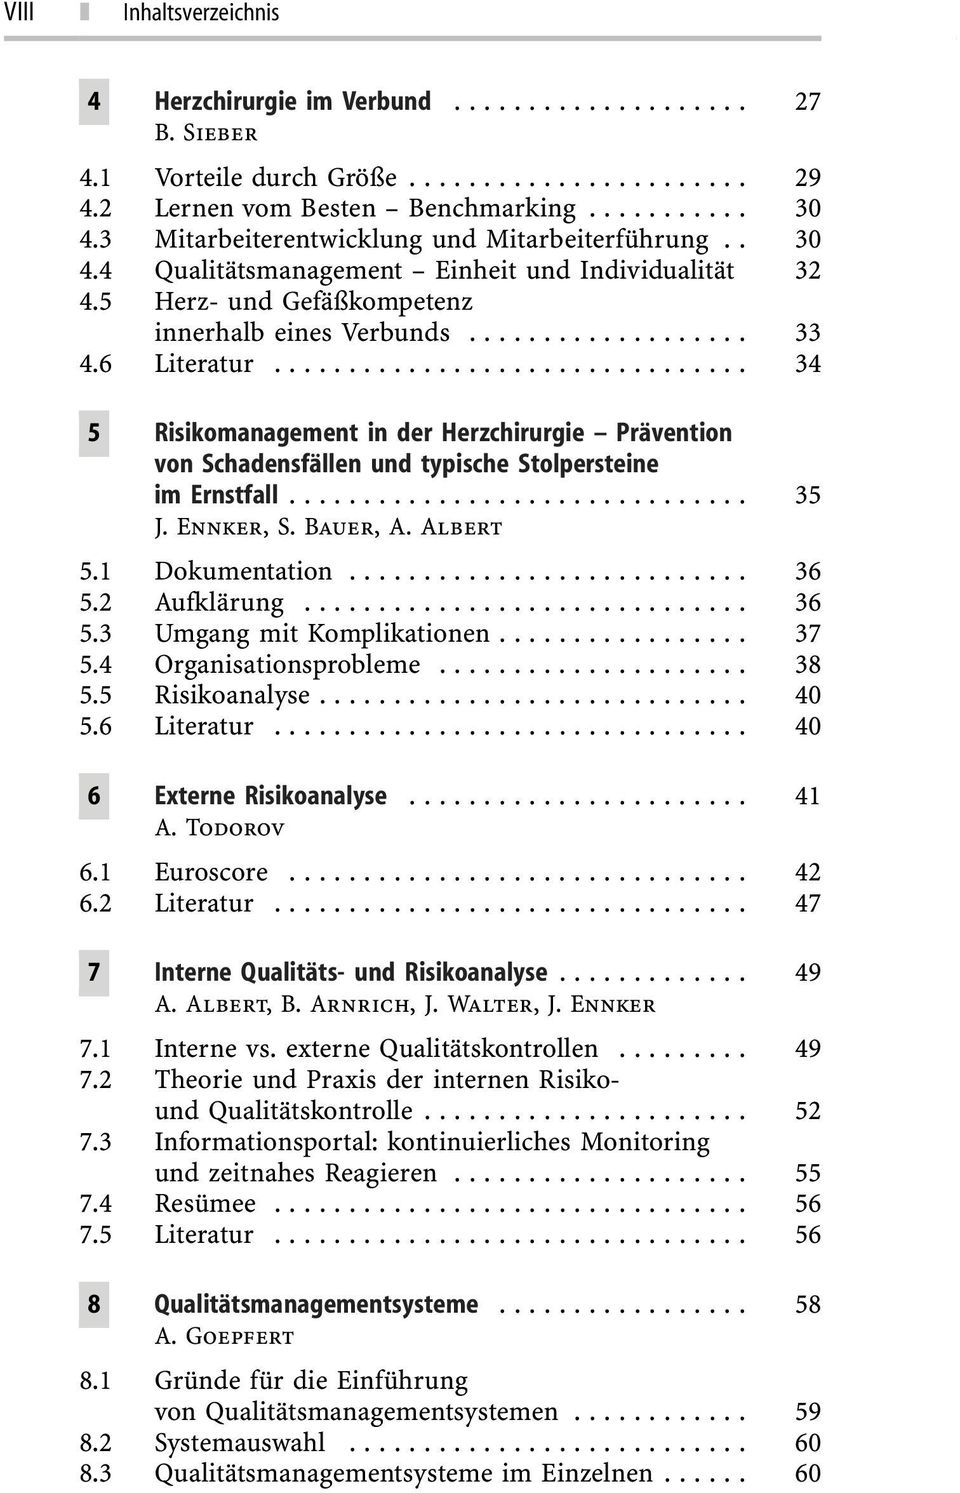 Ennker, S. Bauer, A. Albert 5.1 Dokumentation... 36 5.2 Aufklärung... 36 5.3 Umgang mit Komplikationen... 37 5.4 Organisationsprobleme... 38 5.5 Risikoanalyse... 40 5.6 Literatur.